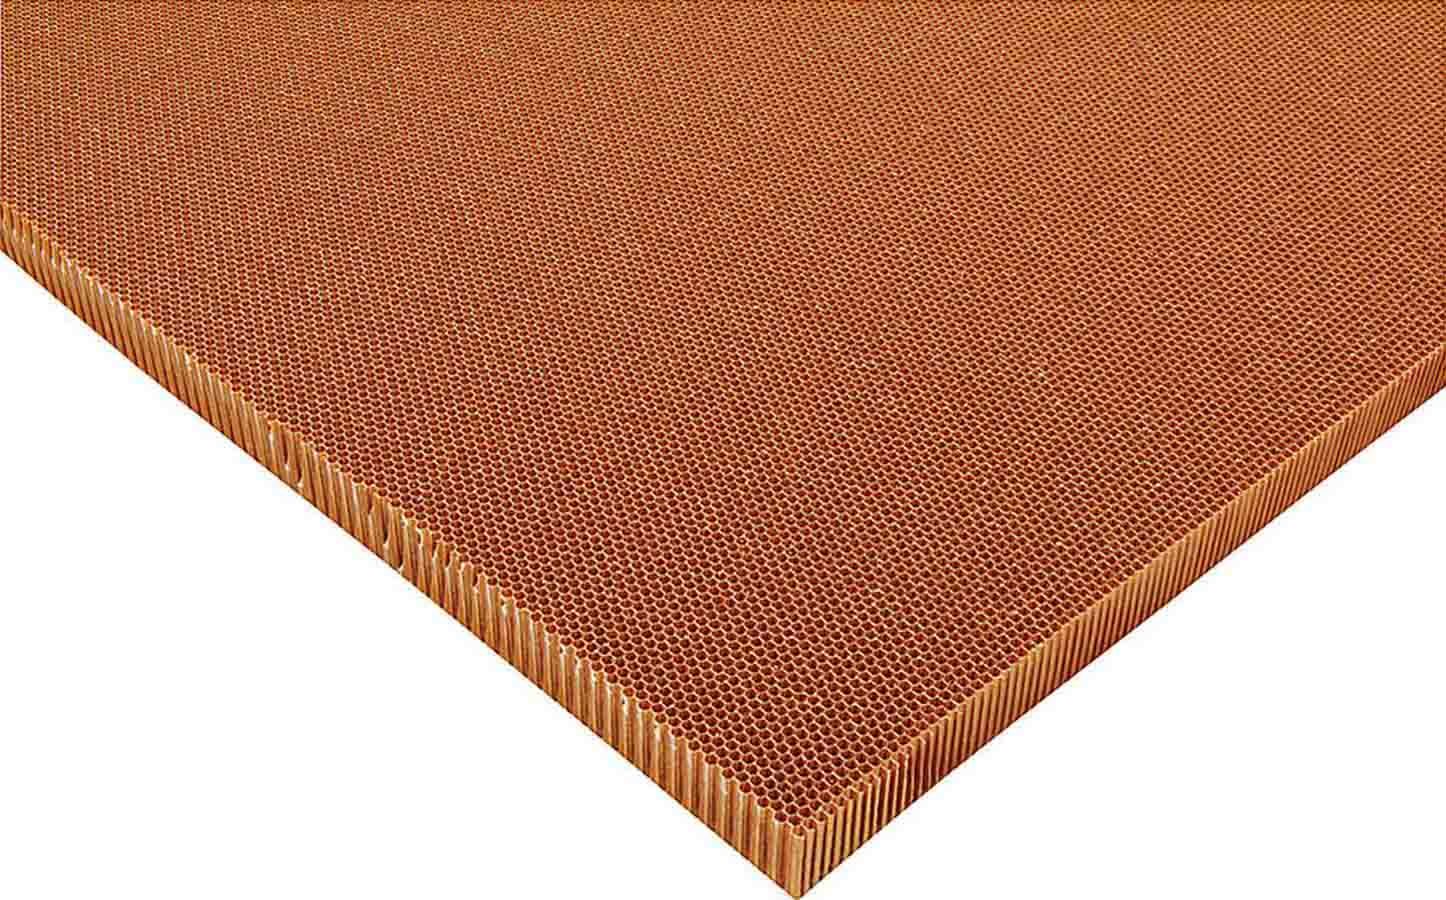 ALLSTAR PERFORMANCE Radiator Screen, Honeycomb, 19 x 26 x 1",  Aramid Fiber, Orange, Each